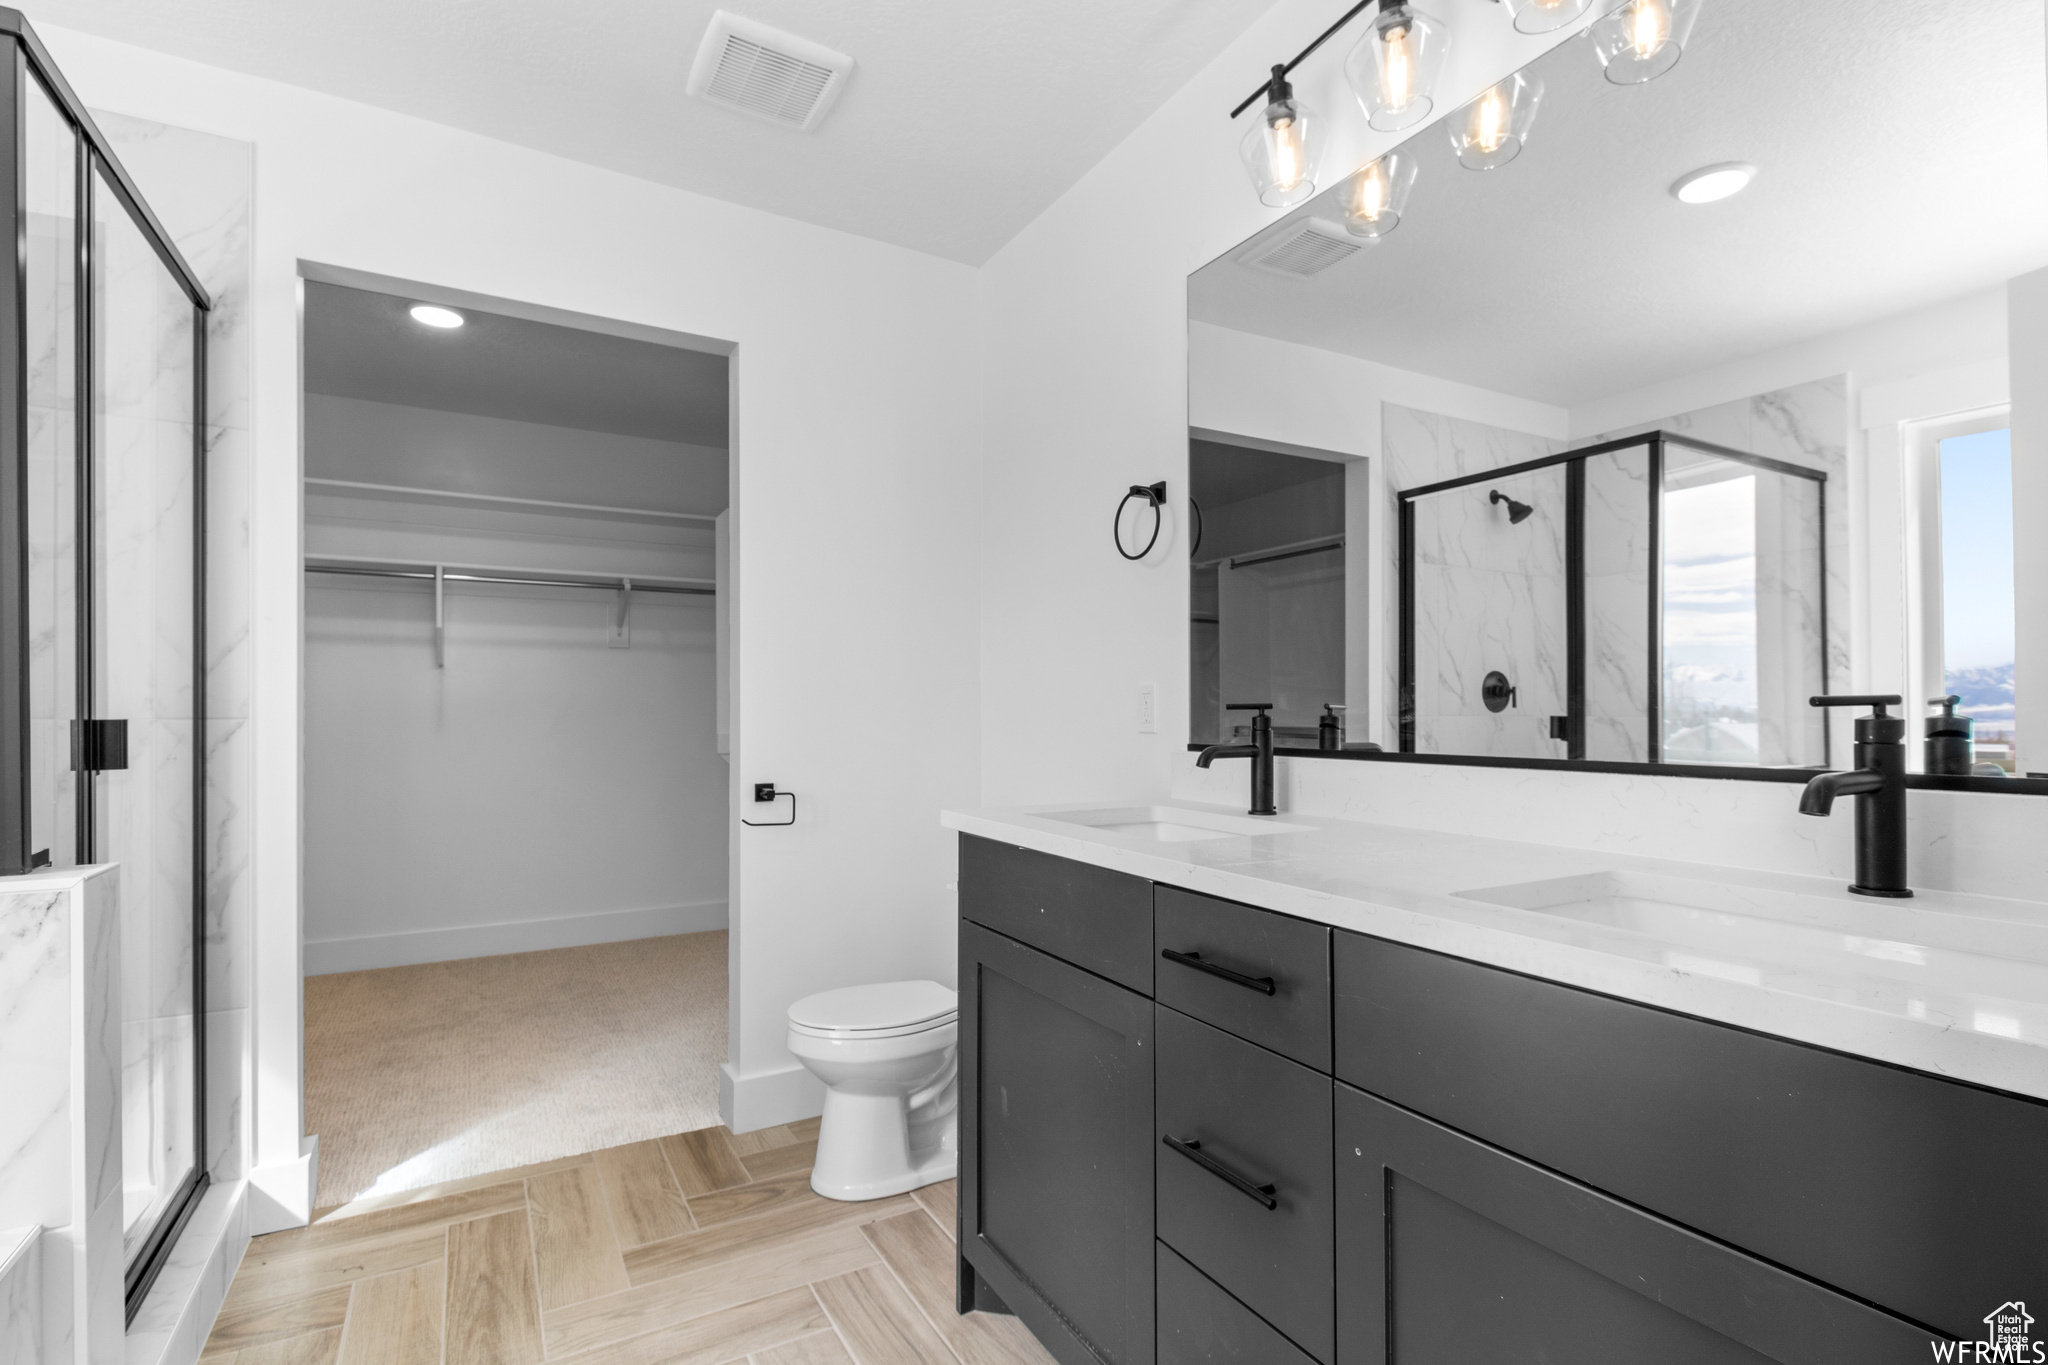 Bathroom featuring walk in shower, toilet, double sink vanity, and parquet flooring